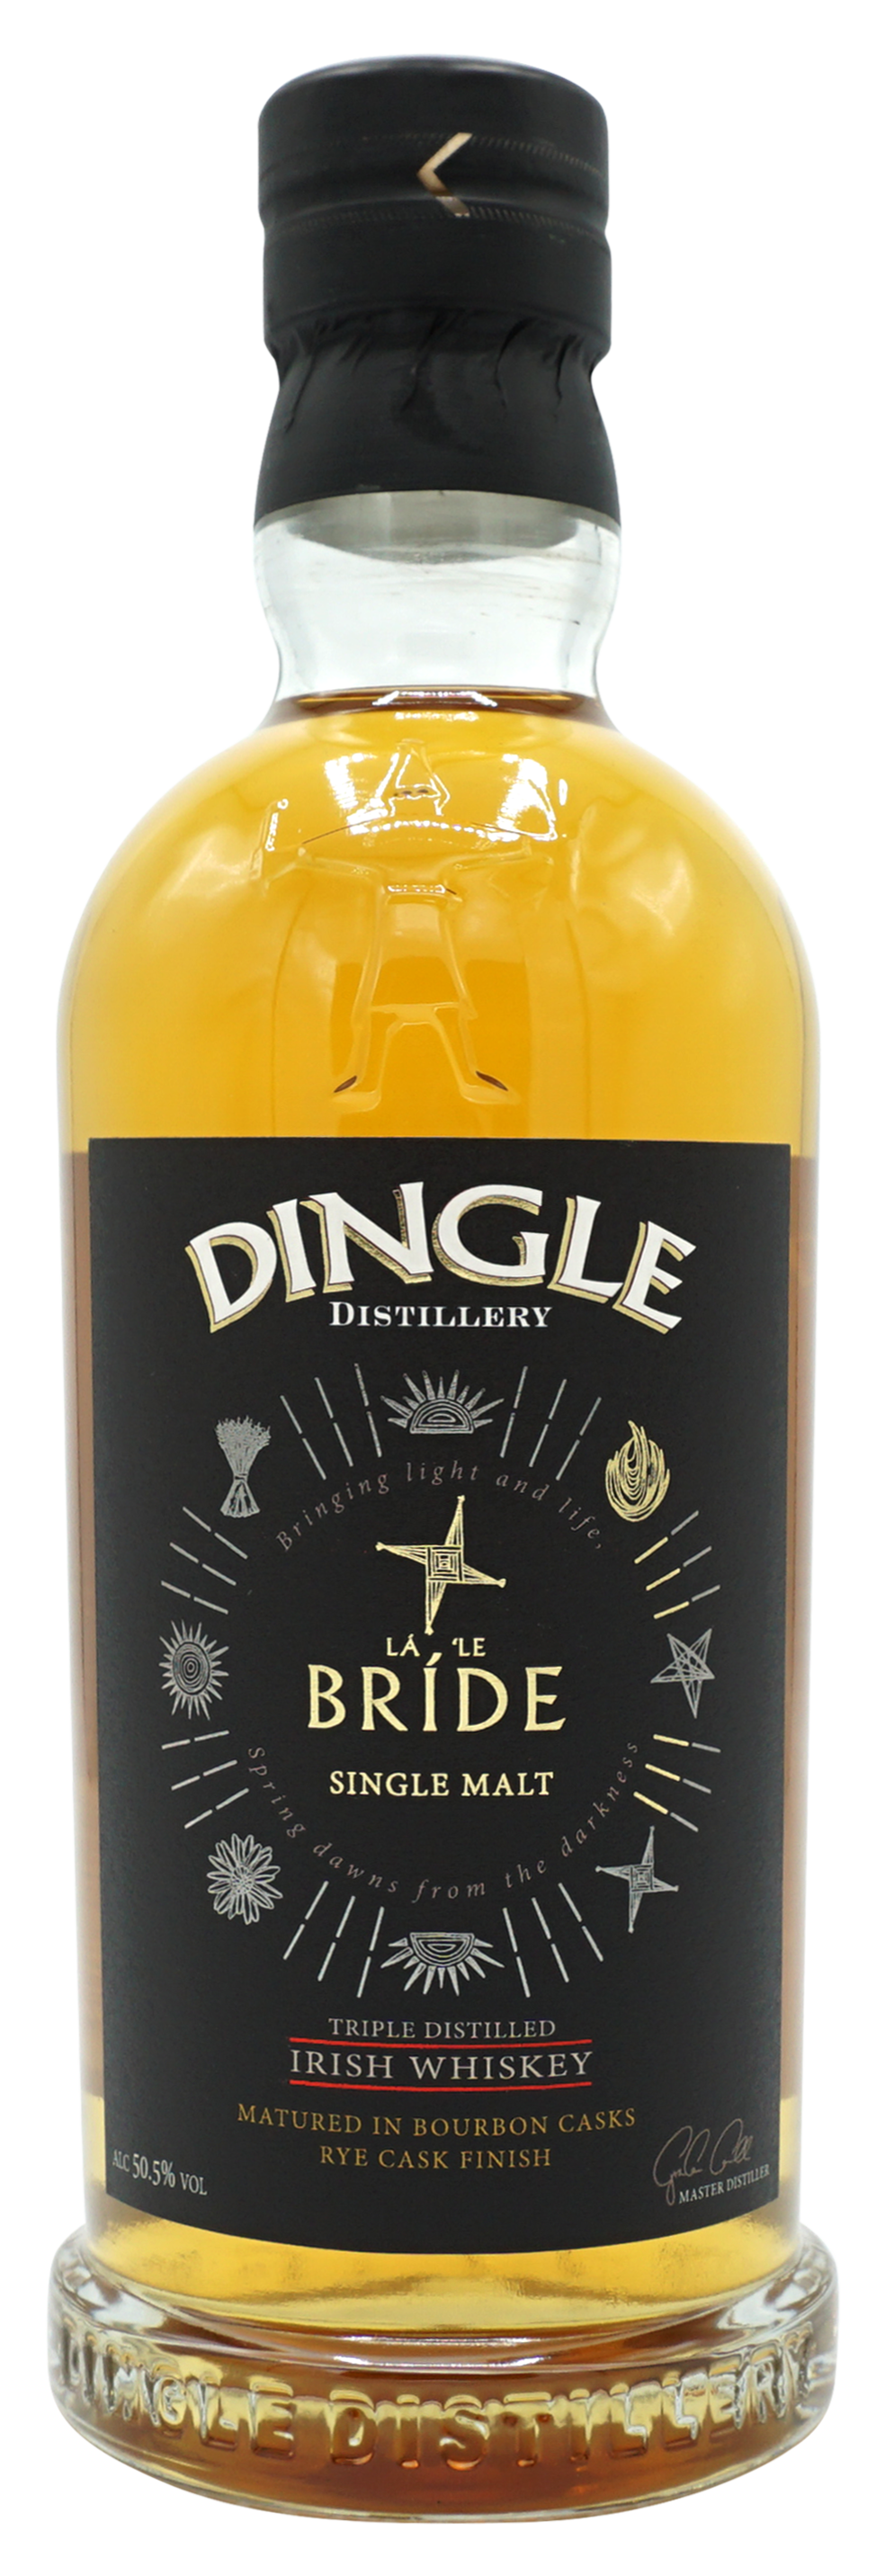 Dingle La Le Bride Single Malt 70cl 505